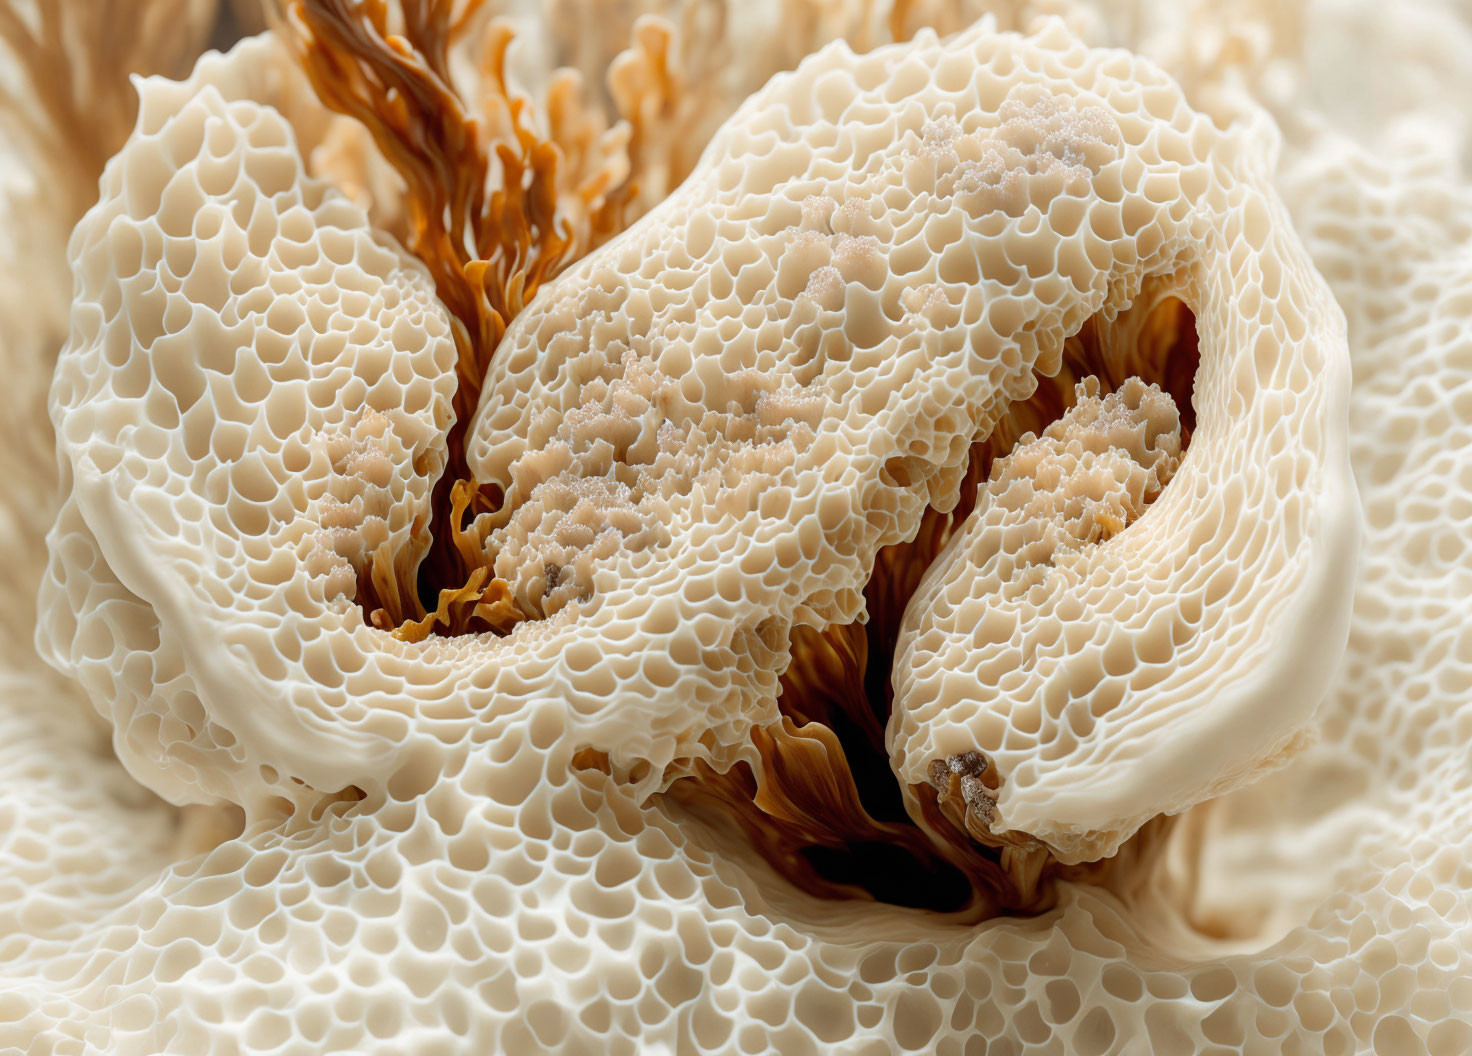 Detailed View of Honeycomb-like Morel Mushroom Surface